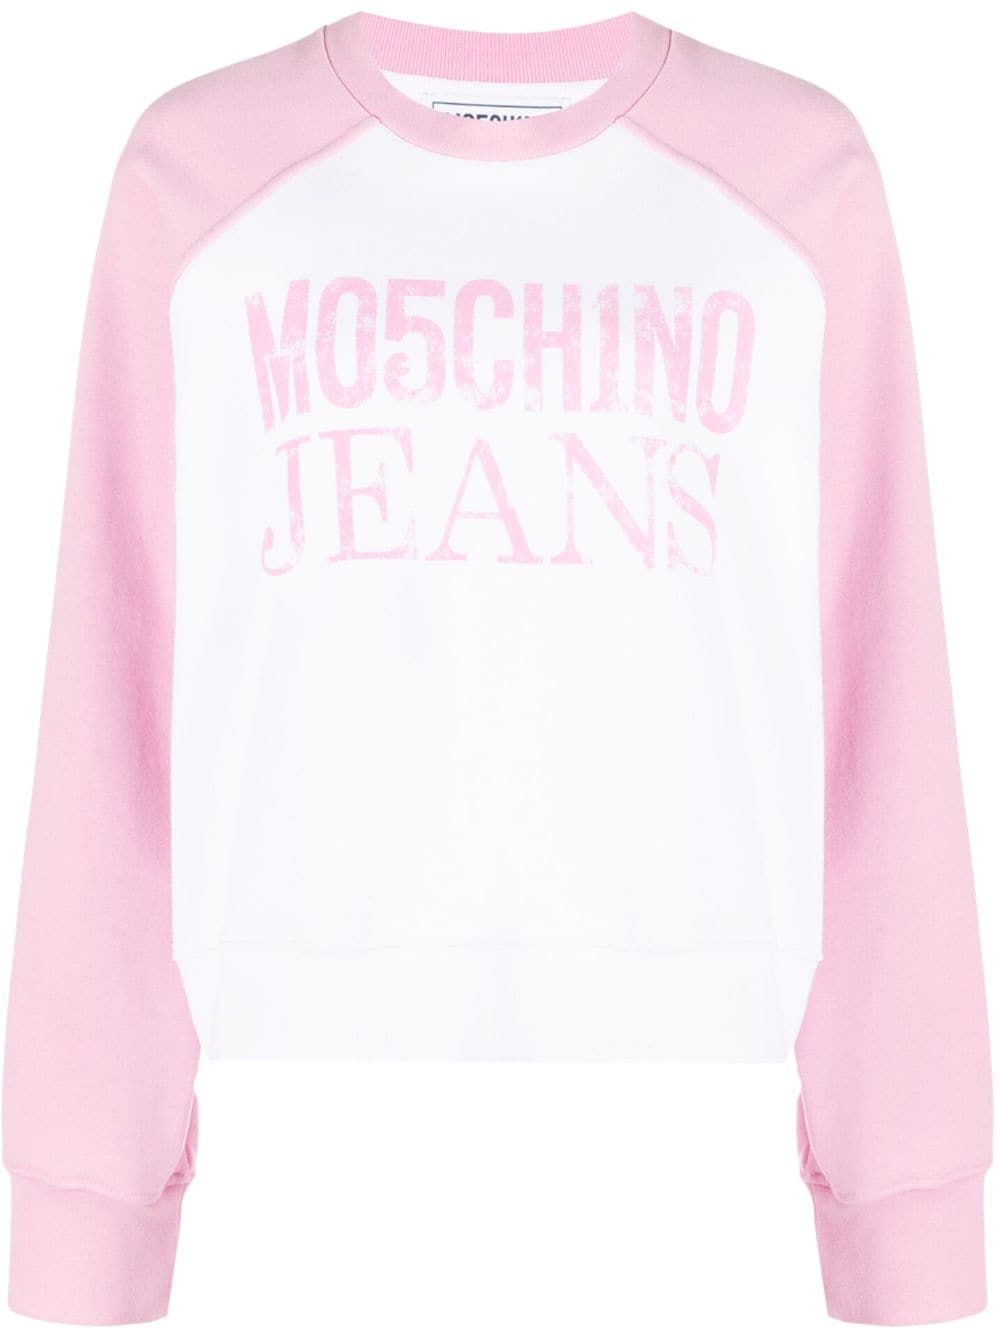 MOSCHINO JEANS logo-print raglan sweatshirt - White